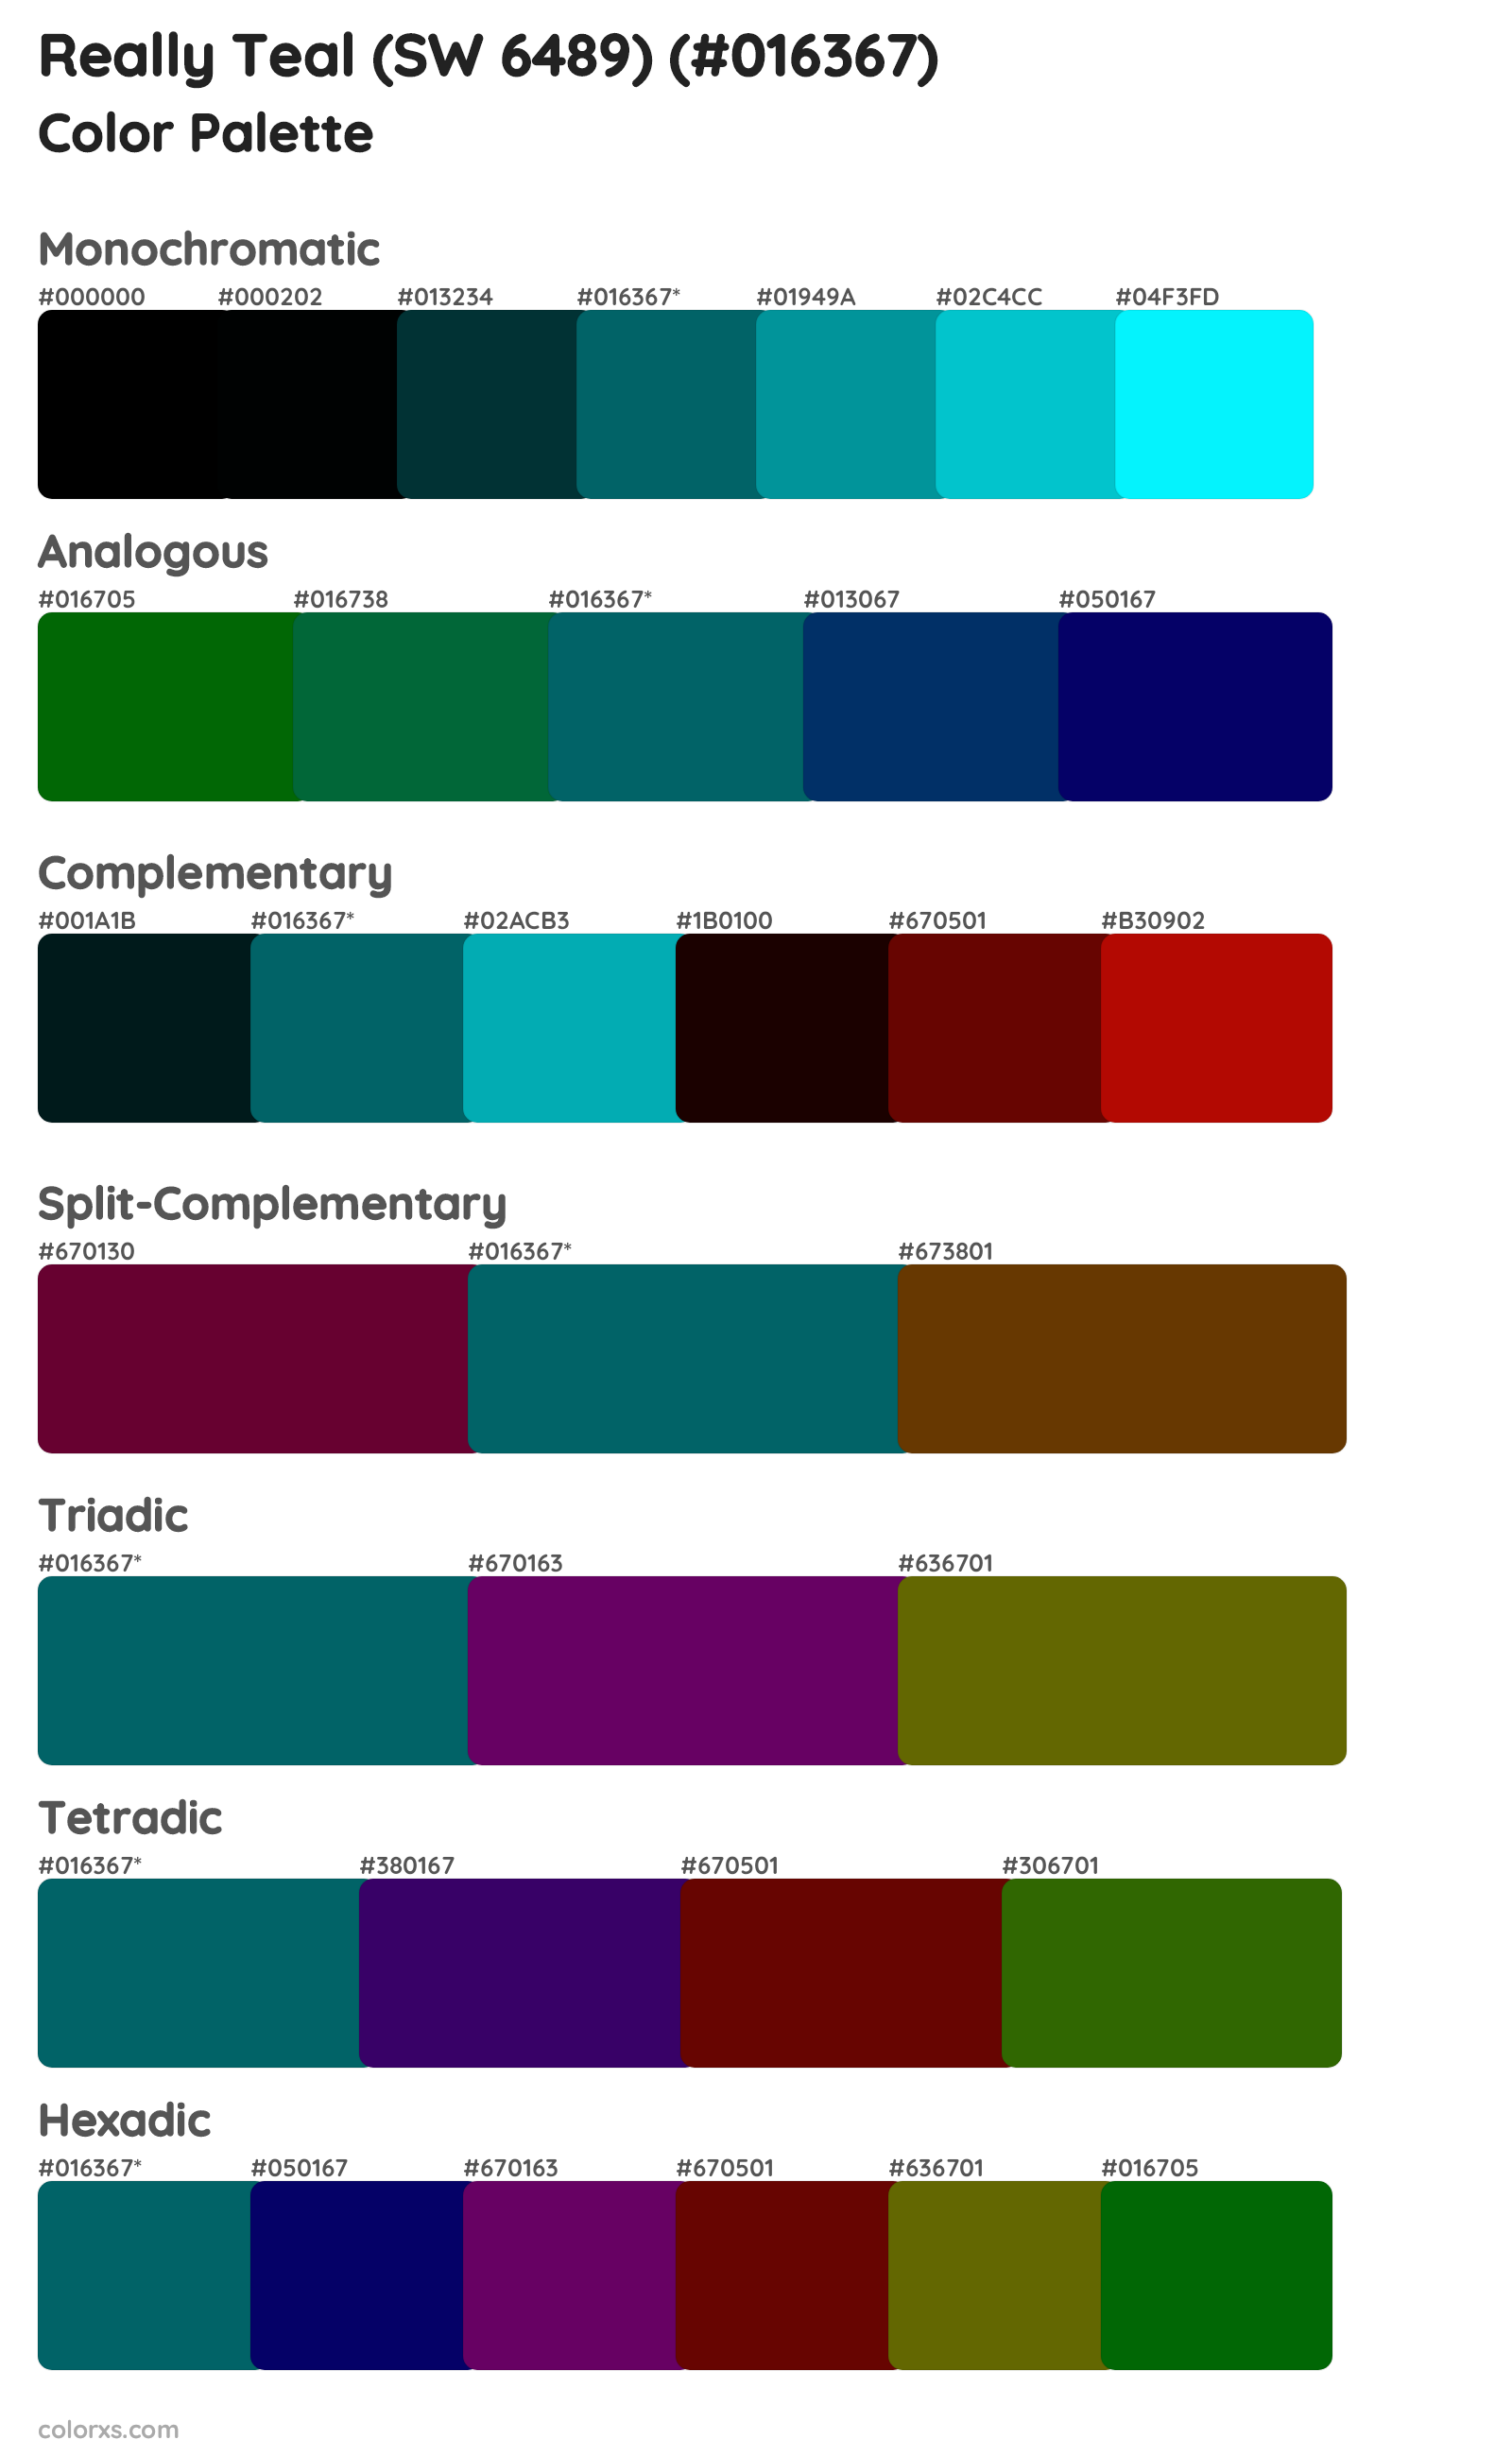 Really Teal (SW 6489) Color Scheme Palettes